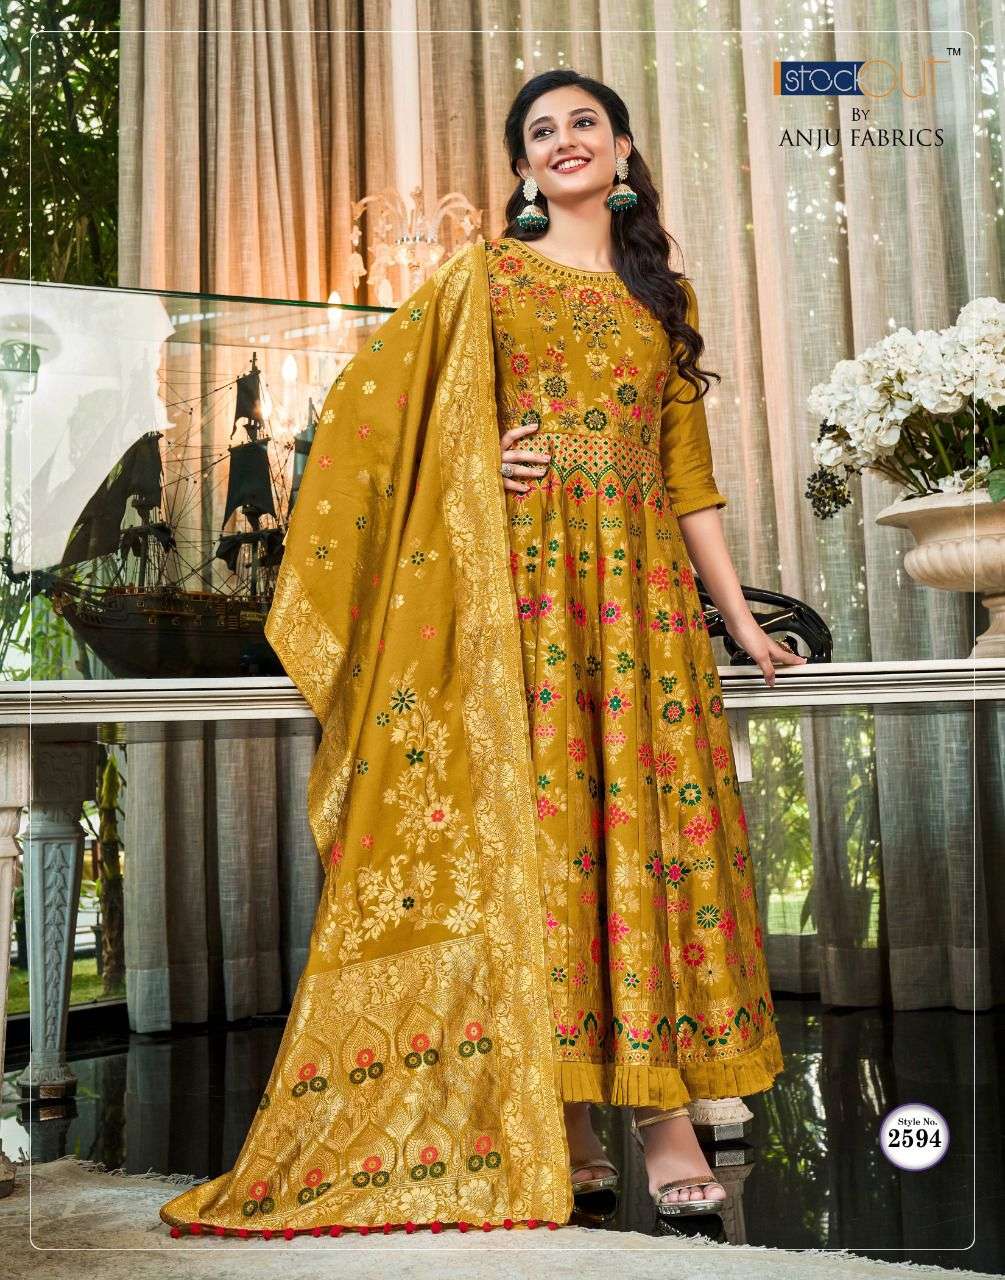 anju fabrics phulkari 2591-2594 series party wear collection wholesaler surat